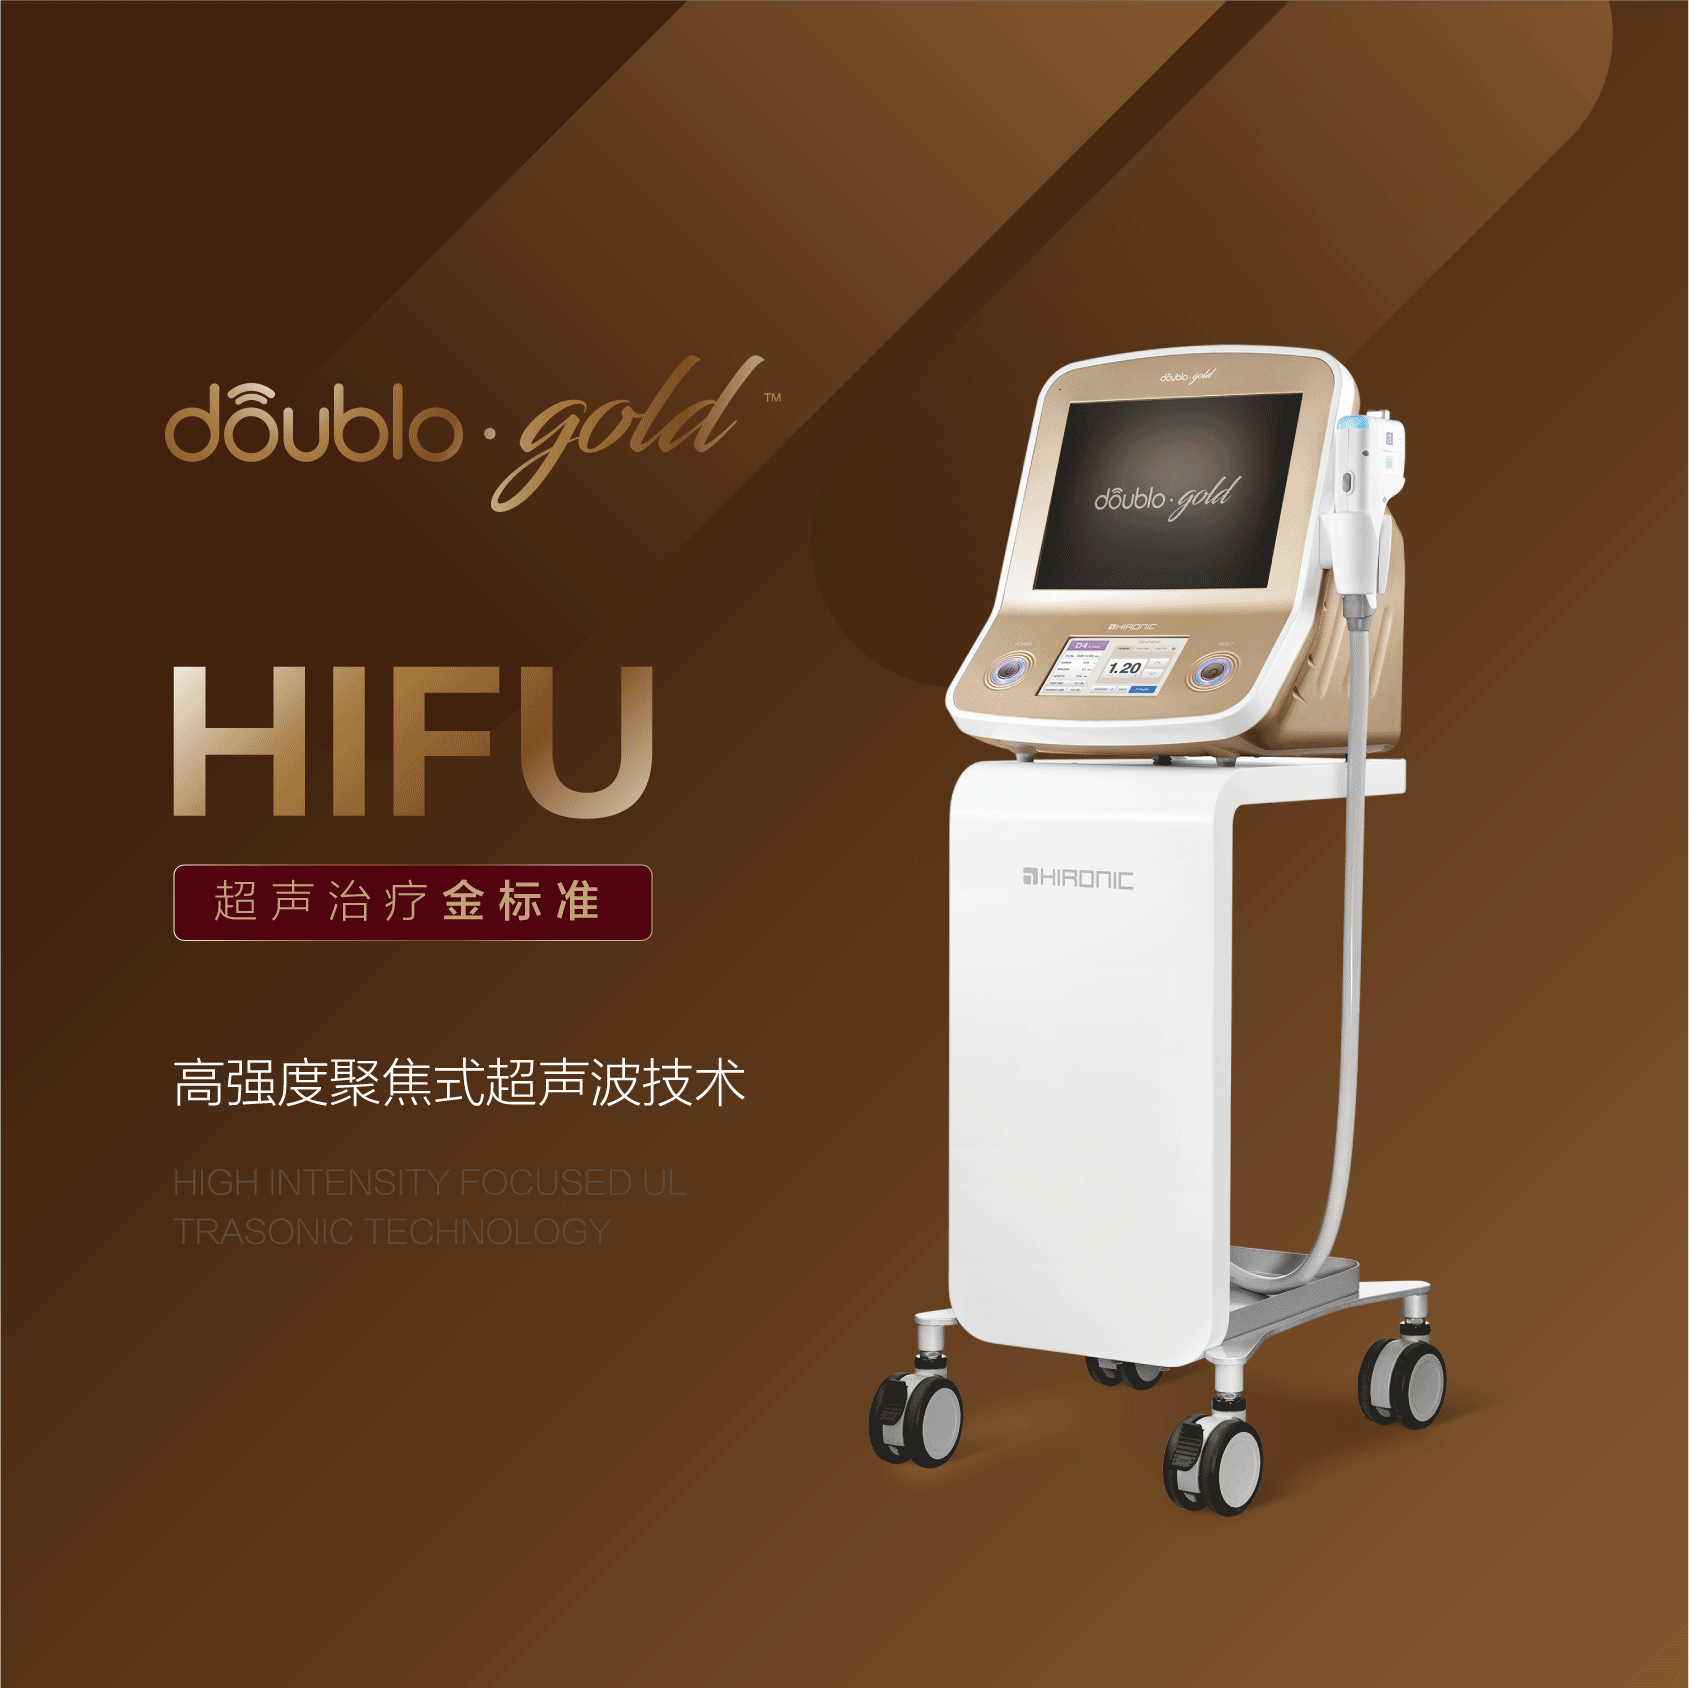 Doublo Gold  HIFU 高能聚焦超声刀